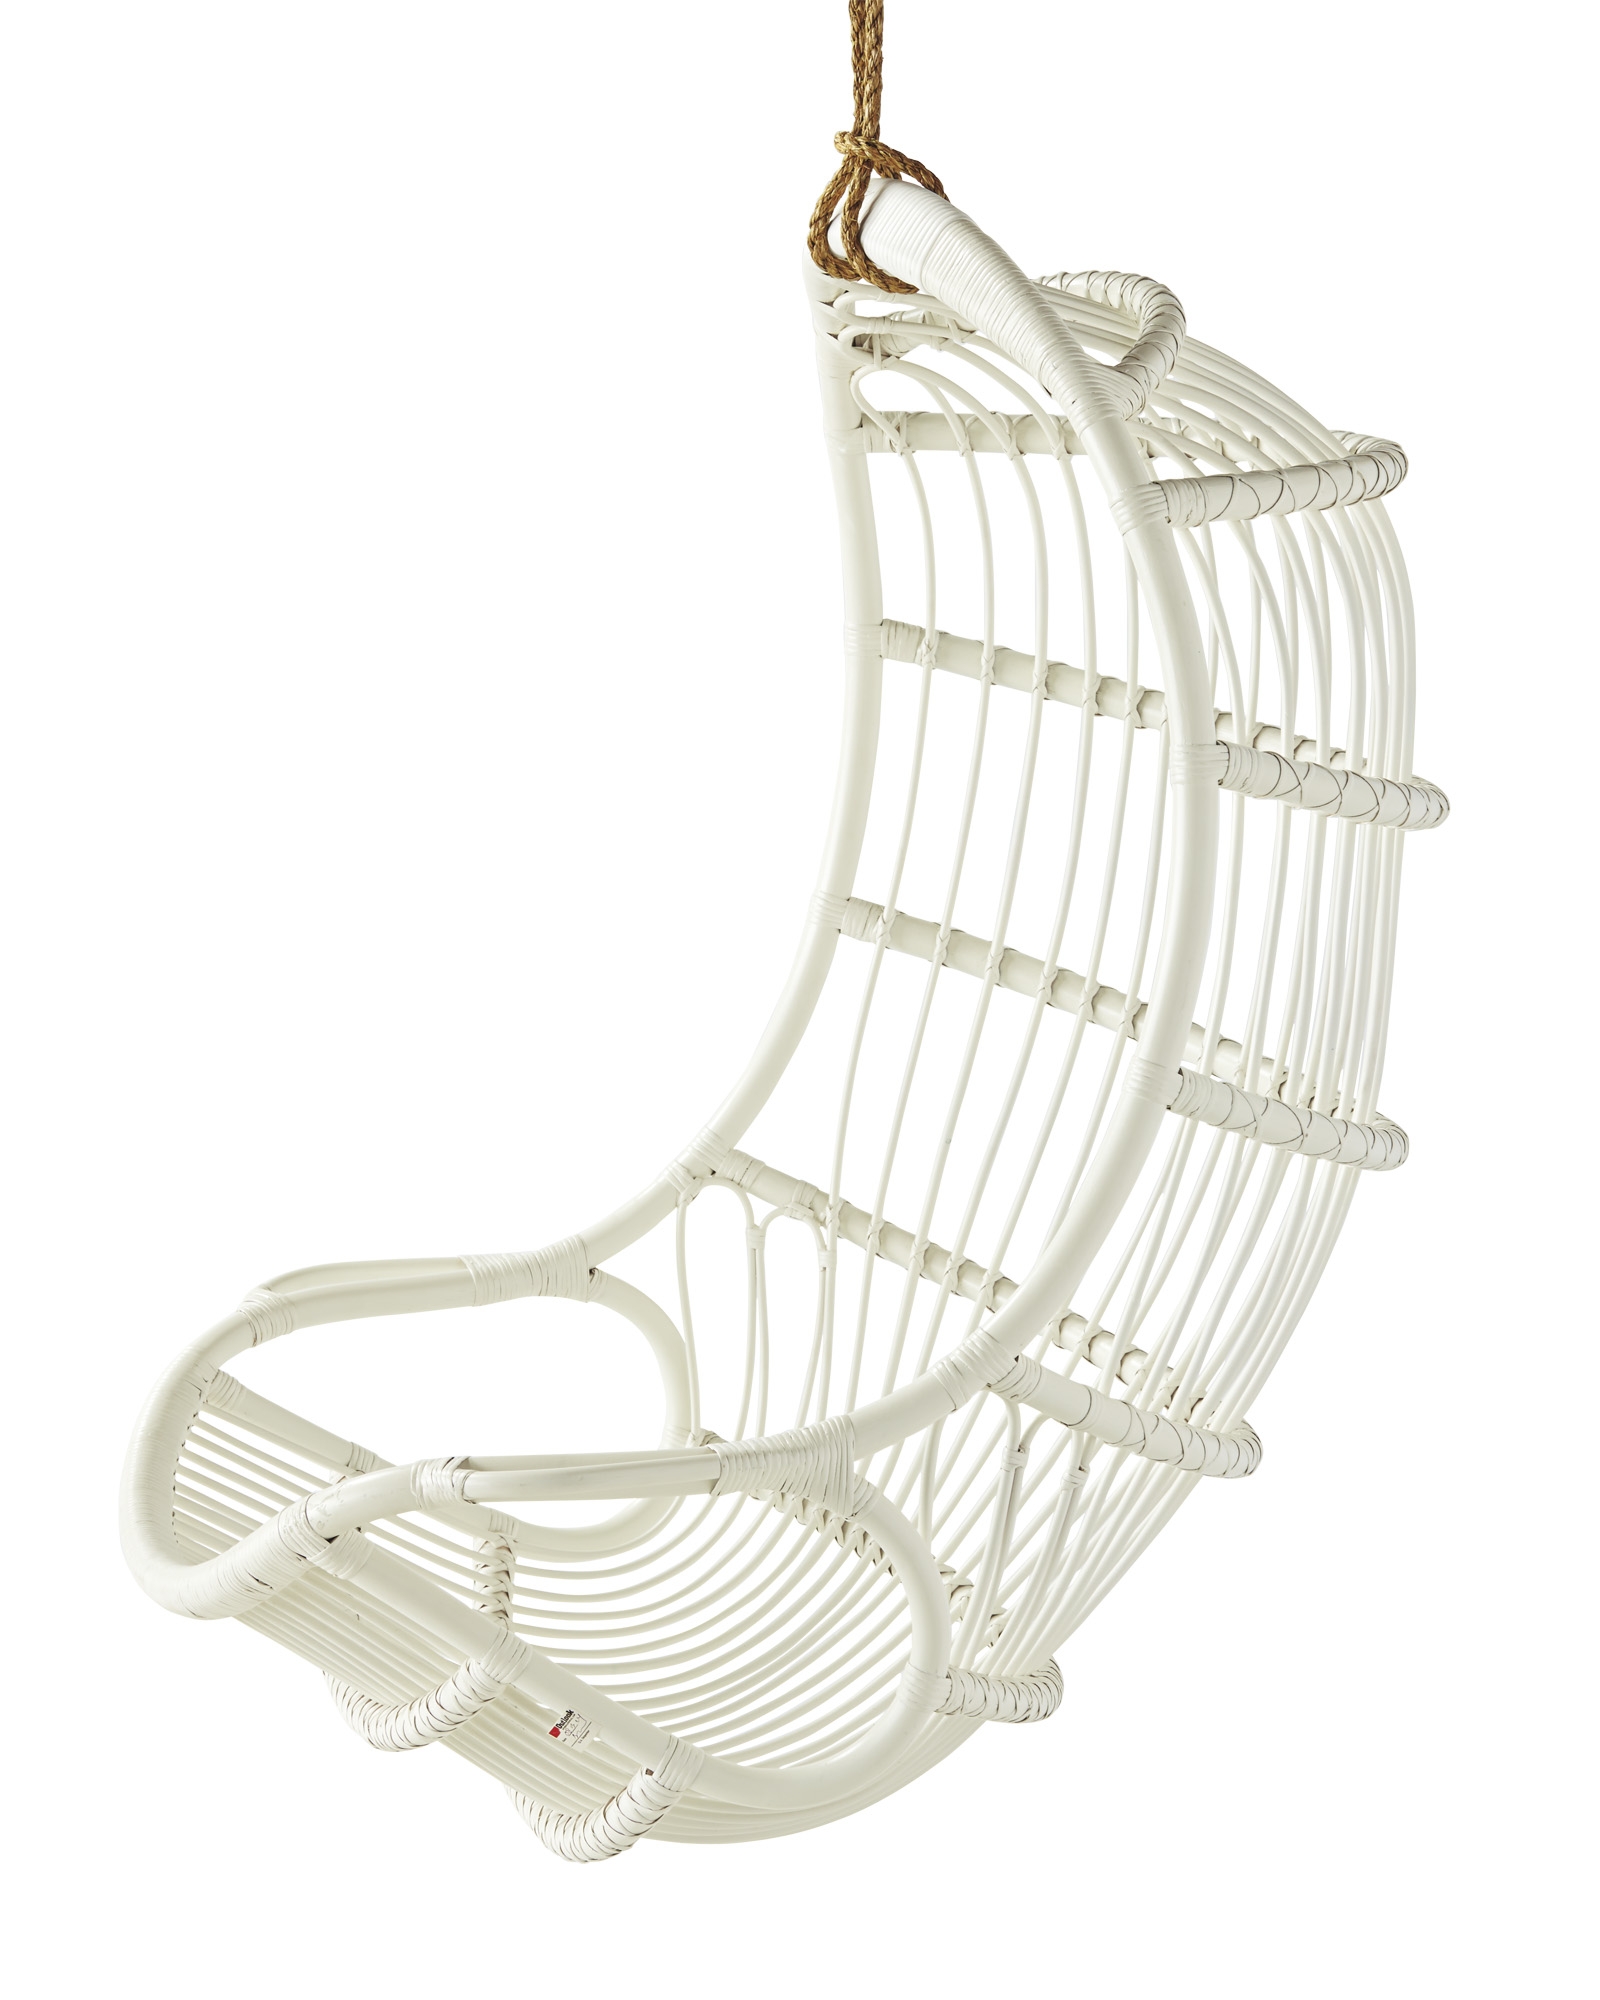 Hanging Rattan Chair - White - Image 2